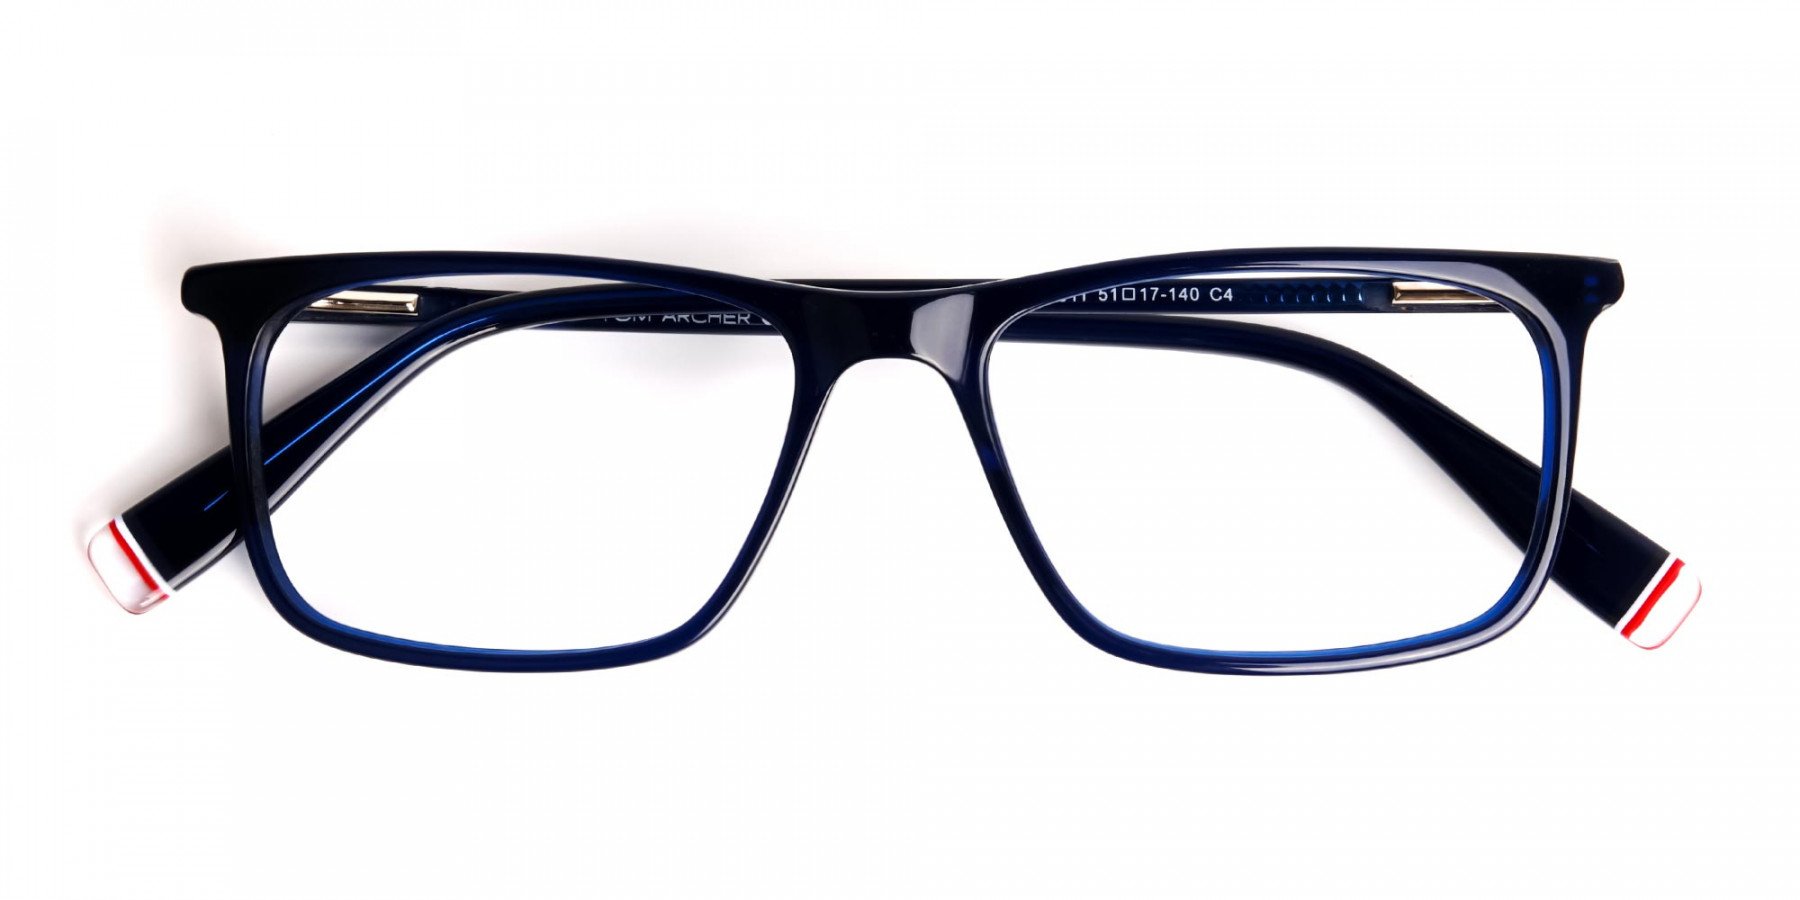 indigo-blue-glasses-rectangular-shape-frames-1